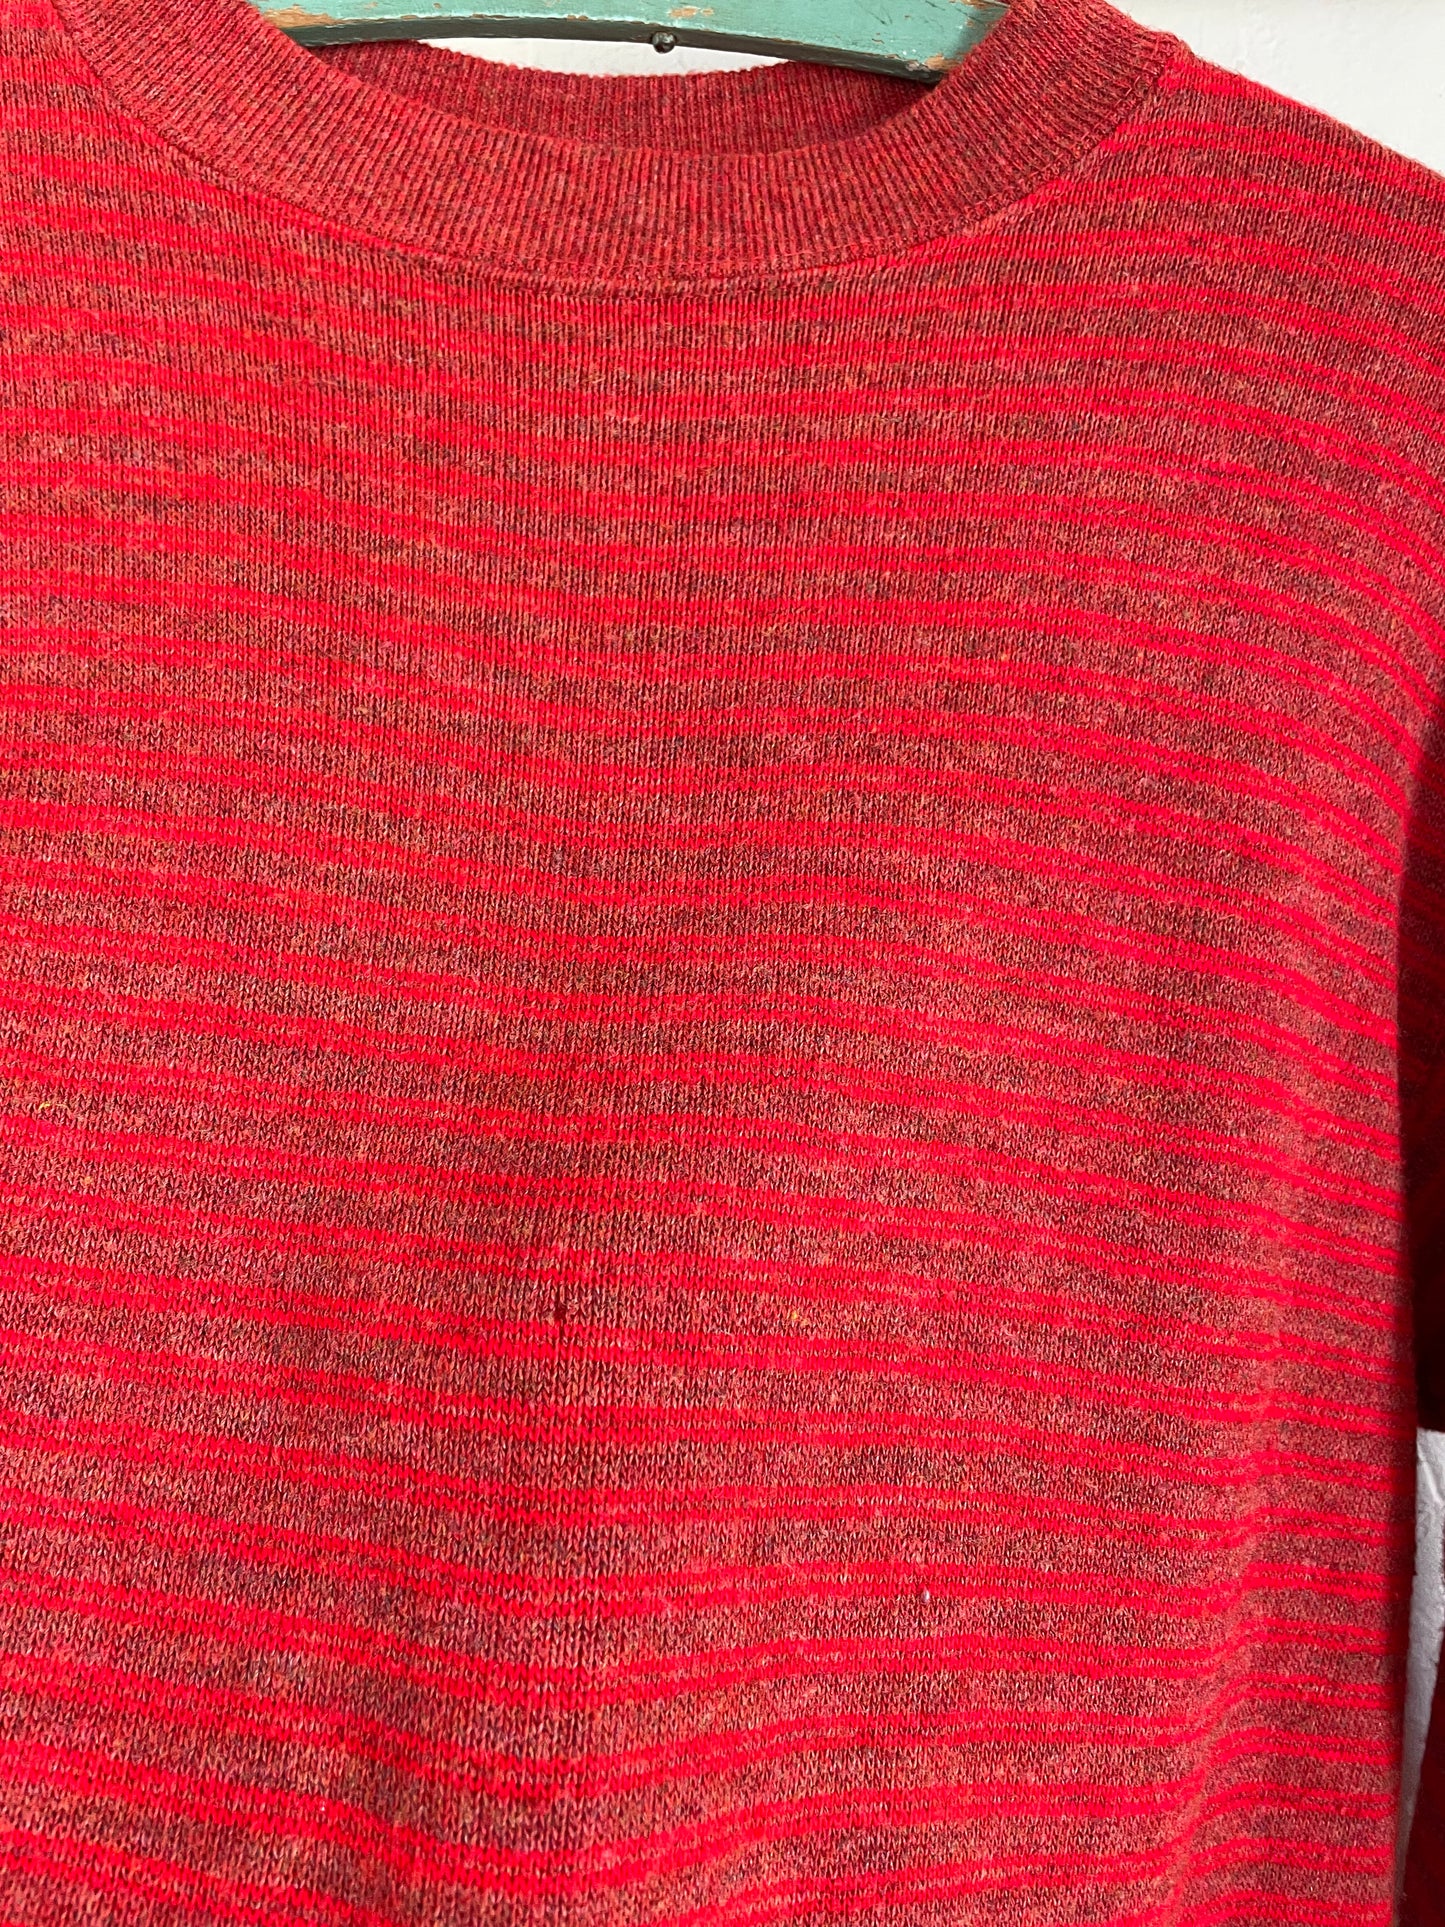 60s/70s Striped Red Sweatshirt